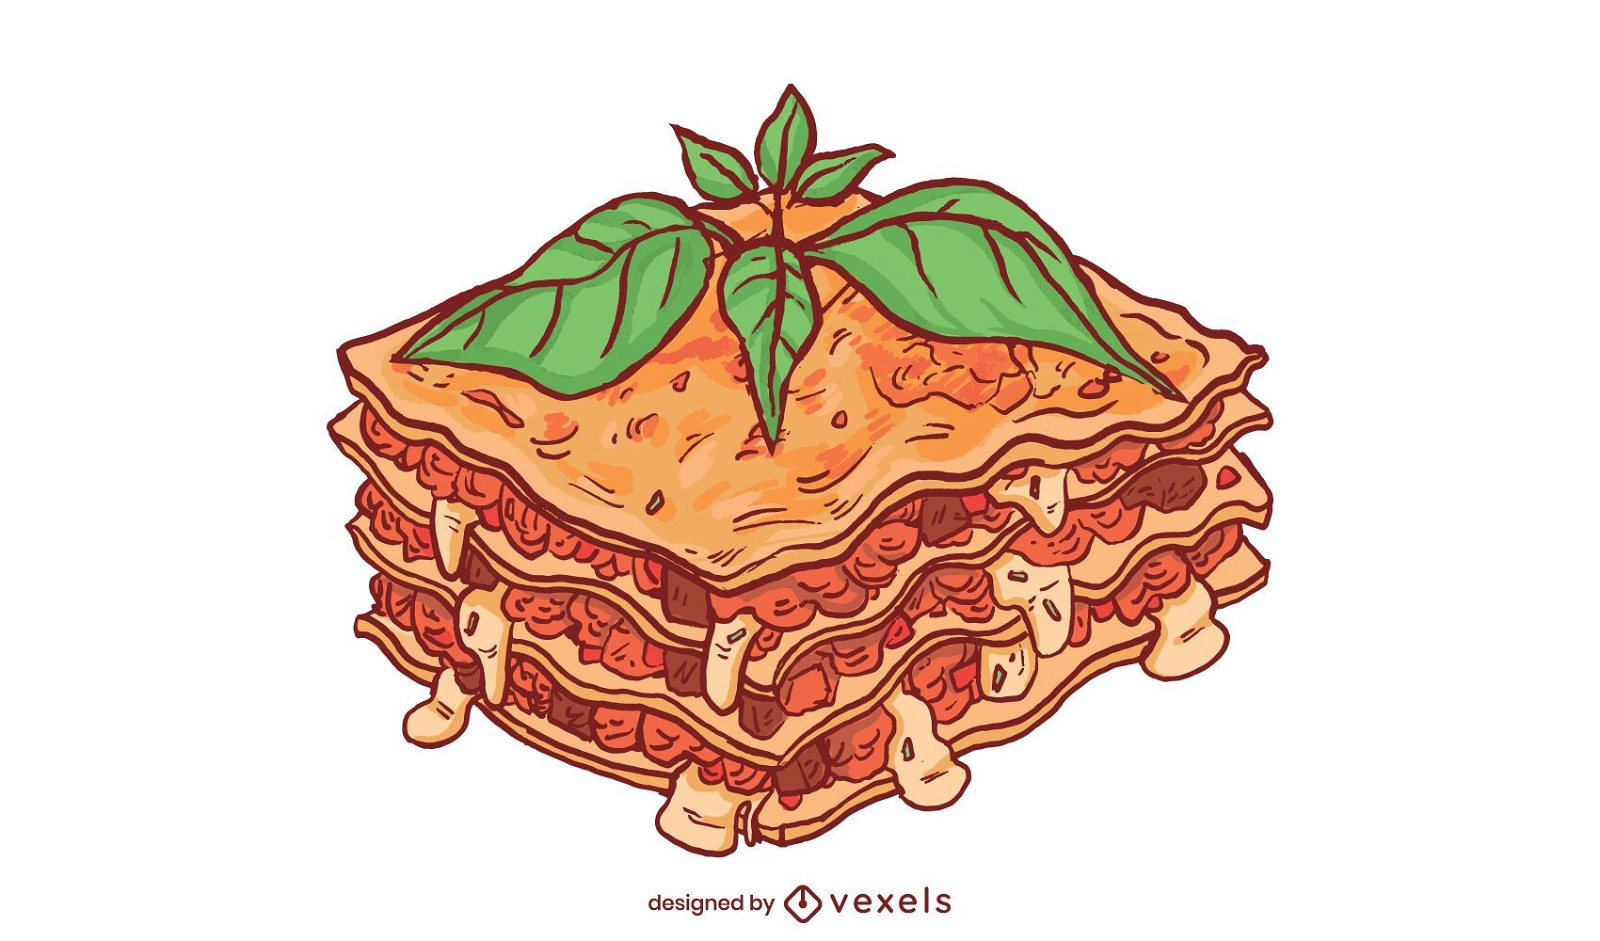 Meat lasagna illustration design